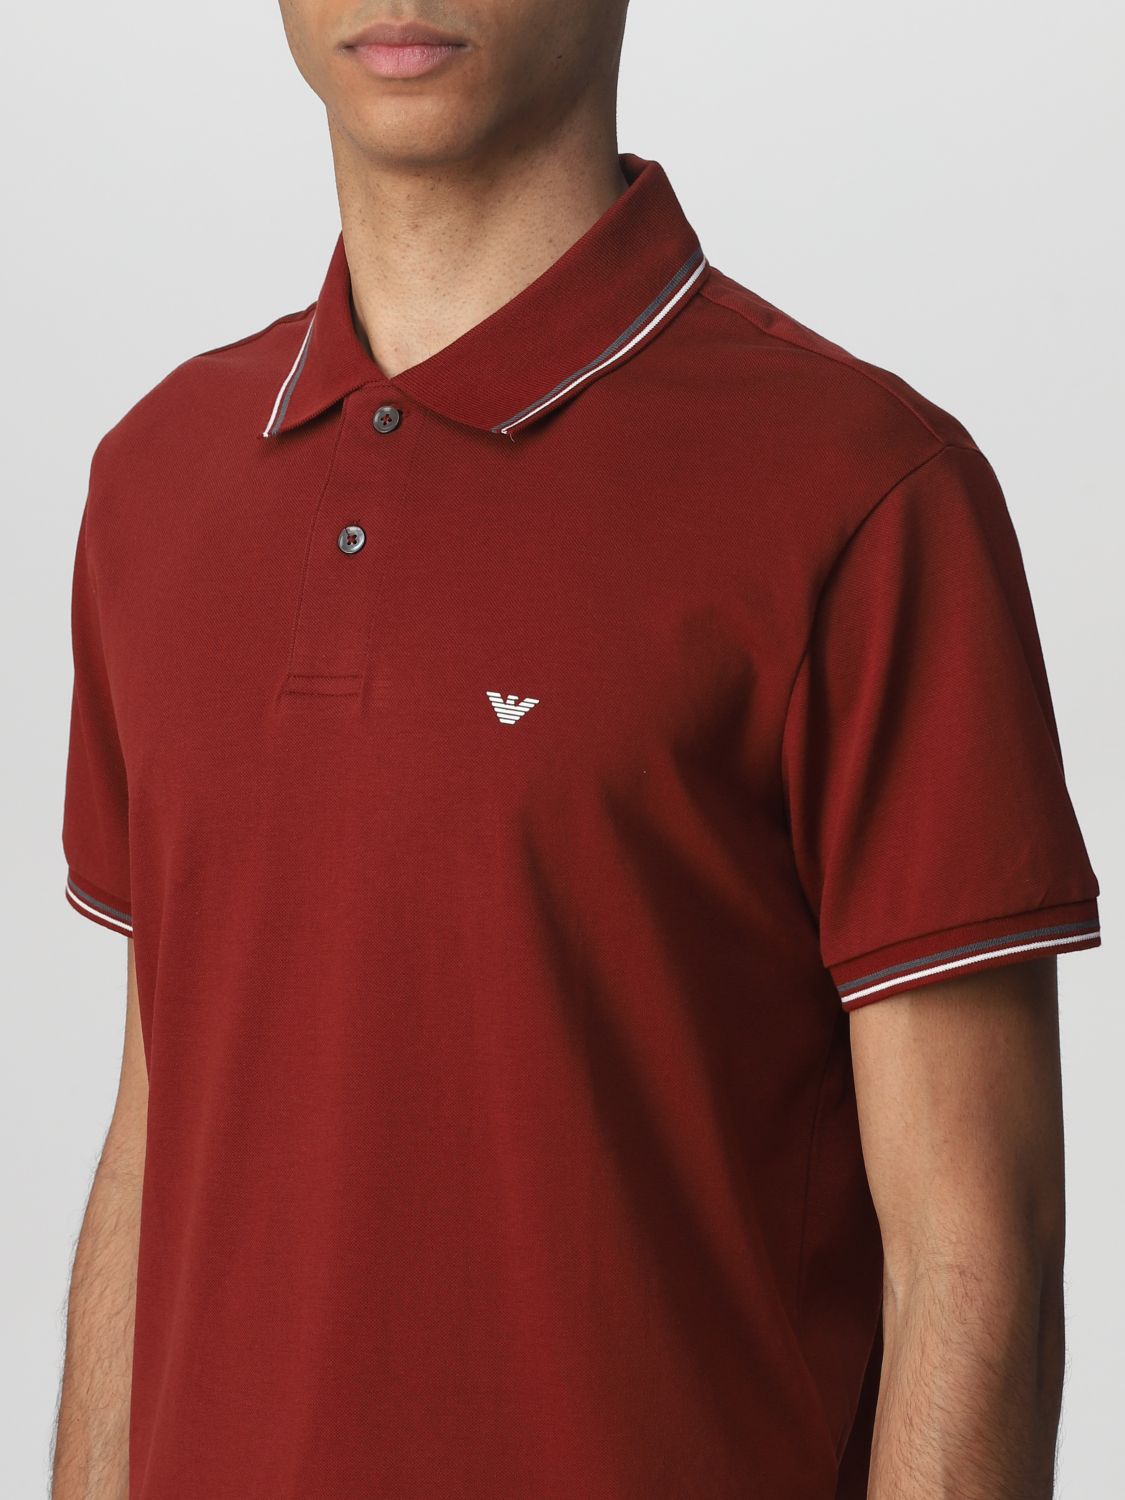 EMPORIO ARMANI: polo shirt for man - Brick Red | Emporio Armani polo shirt  8N1FB41JPTZ online on 